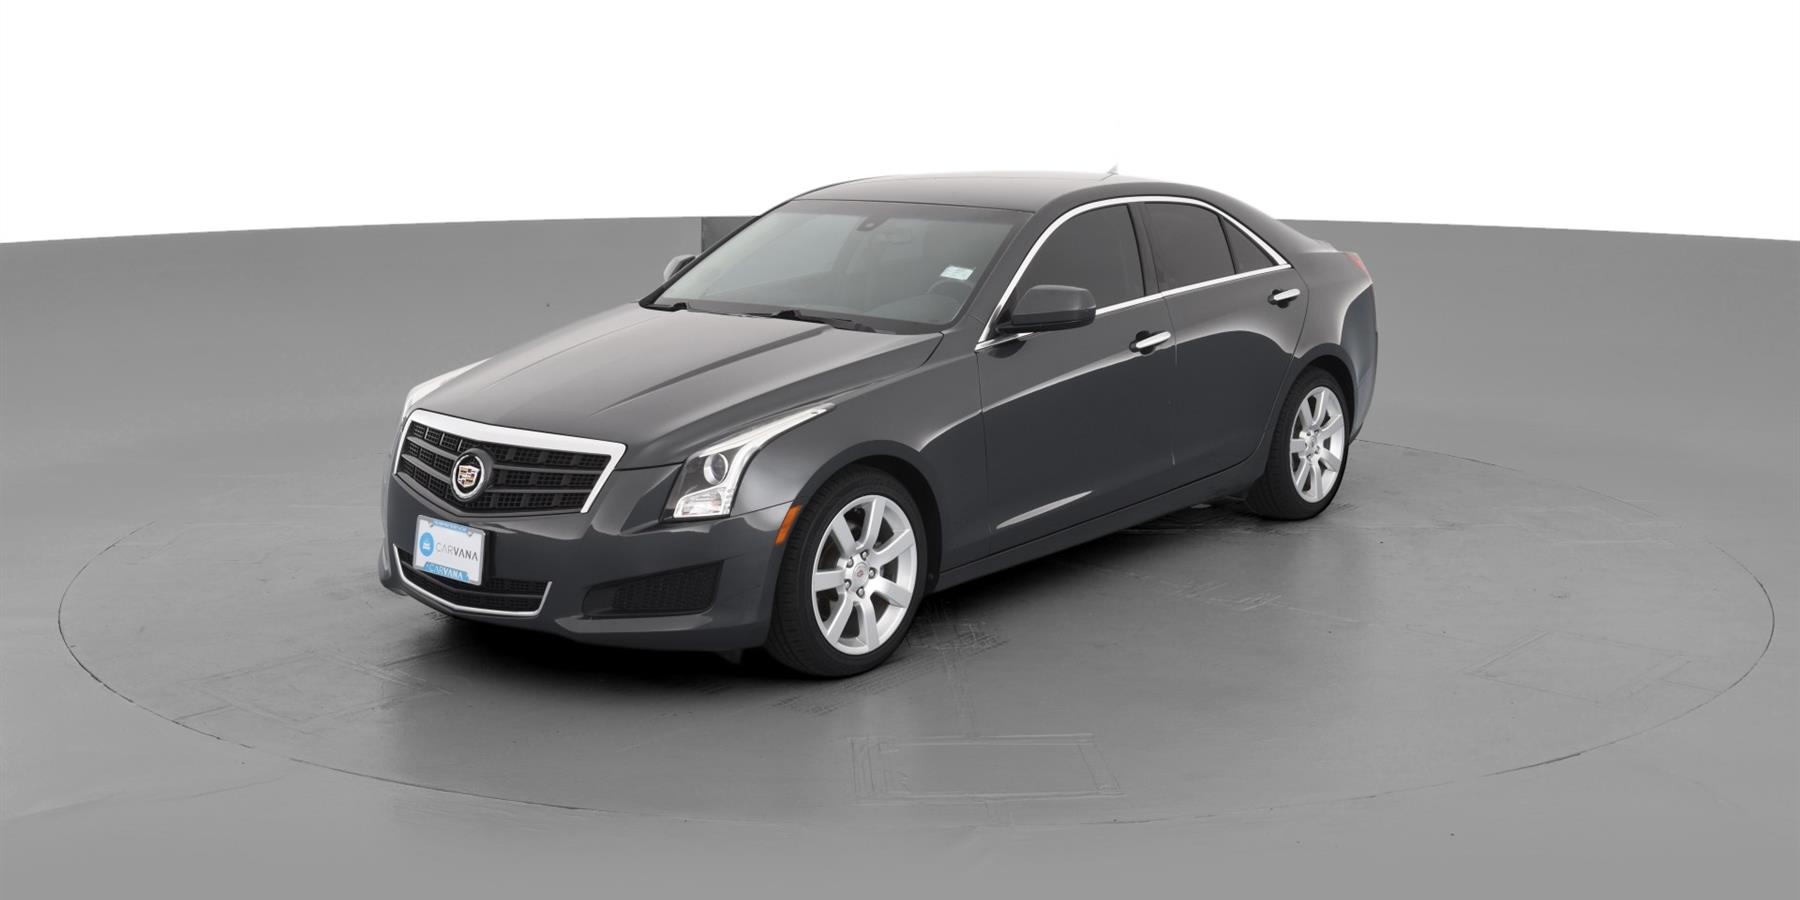 2014 Cadillac Ats 2 5l Standard Sedan 4d For Sale Carvana